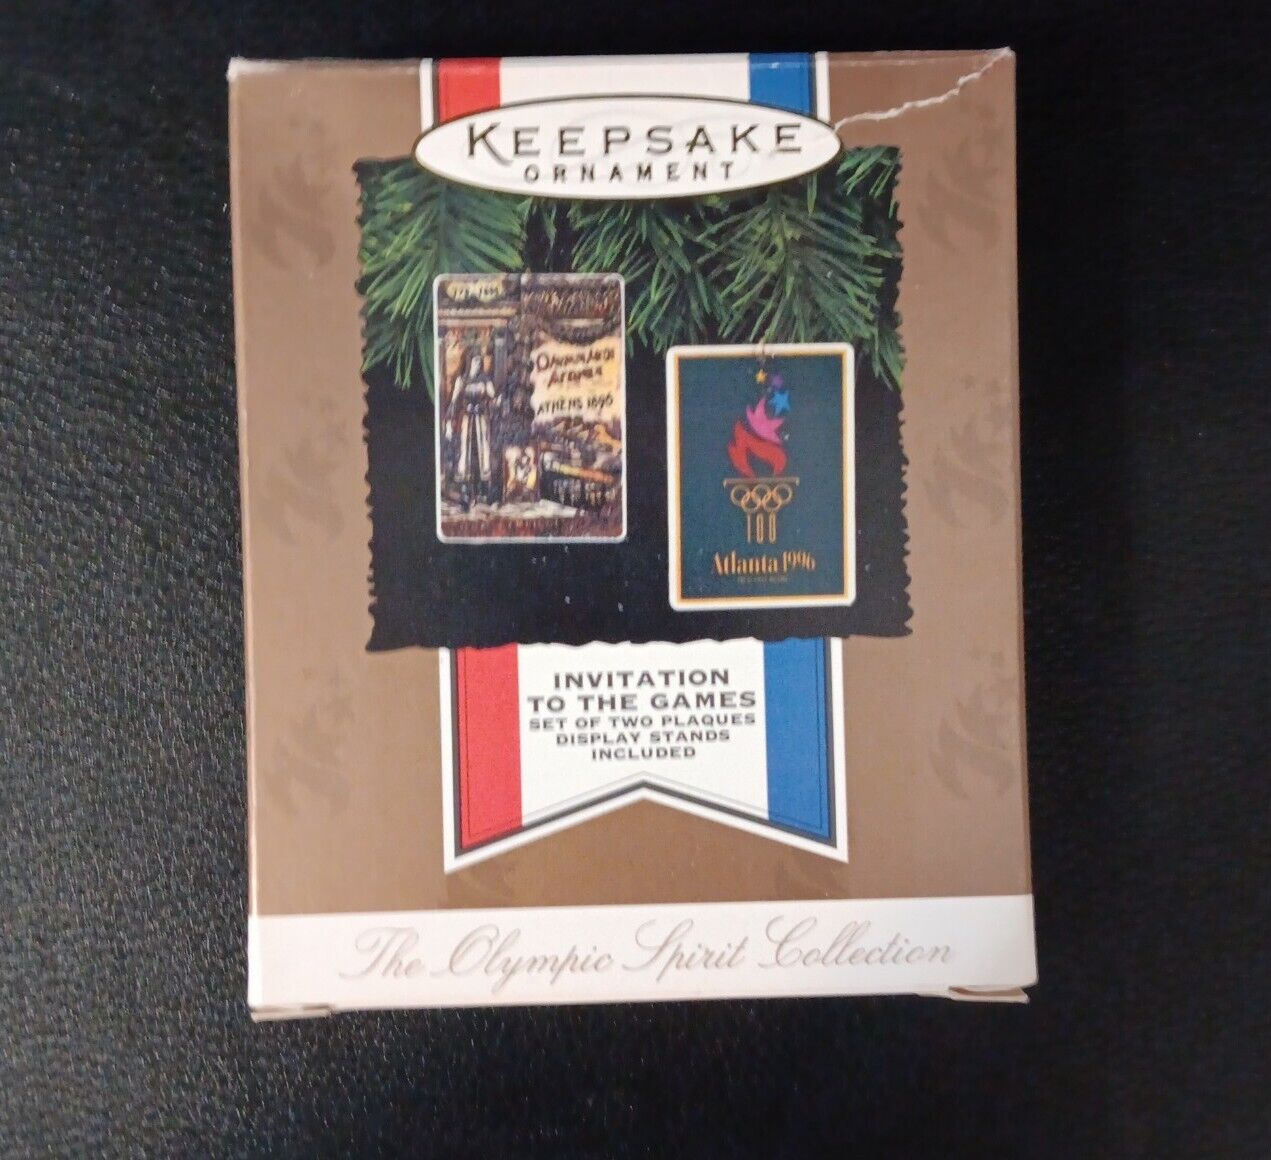 Hallmark Keepsake Ornament Invitation To The Games Two 1896 & 1996 Ceramic Cards